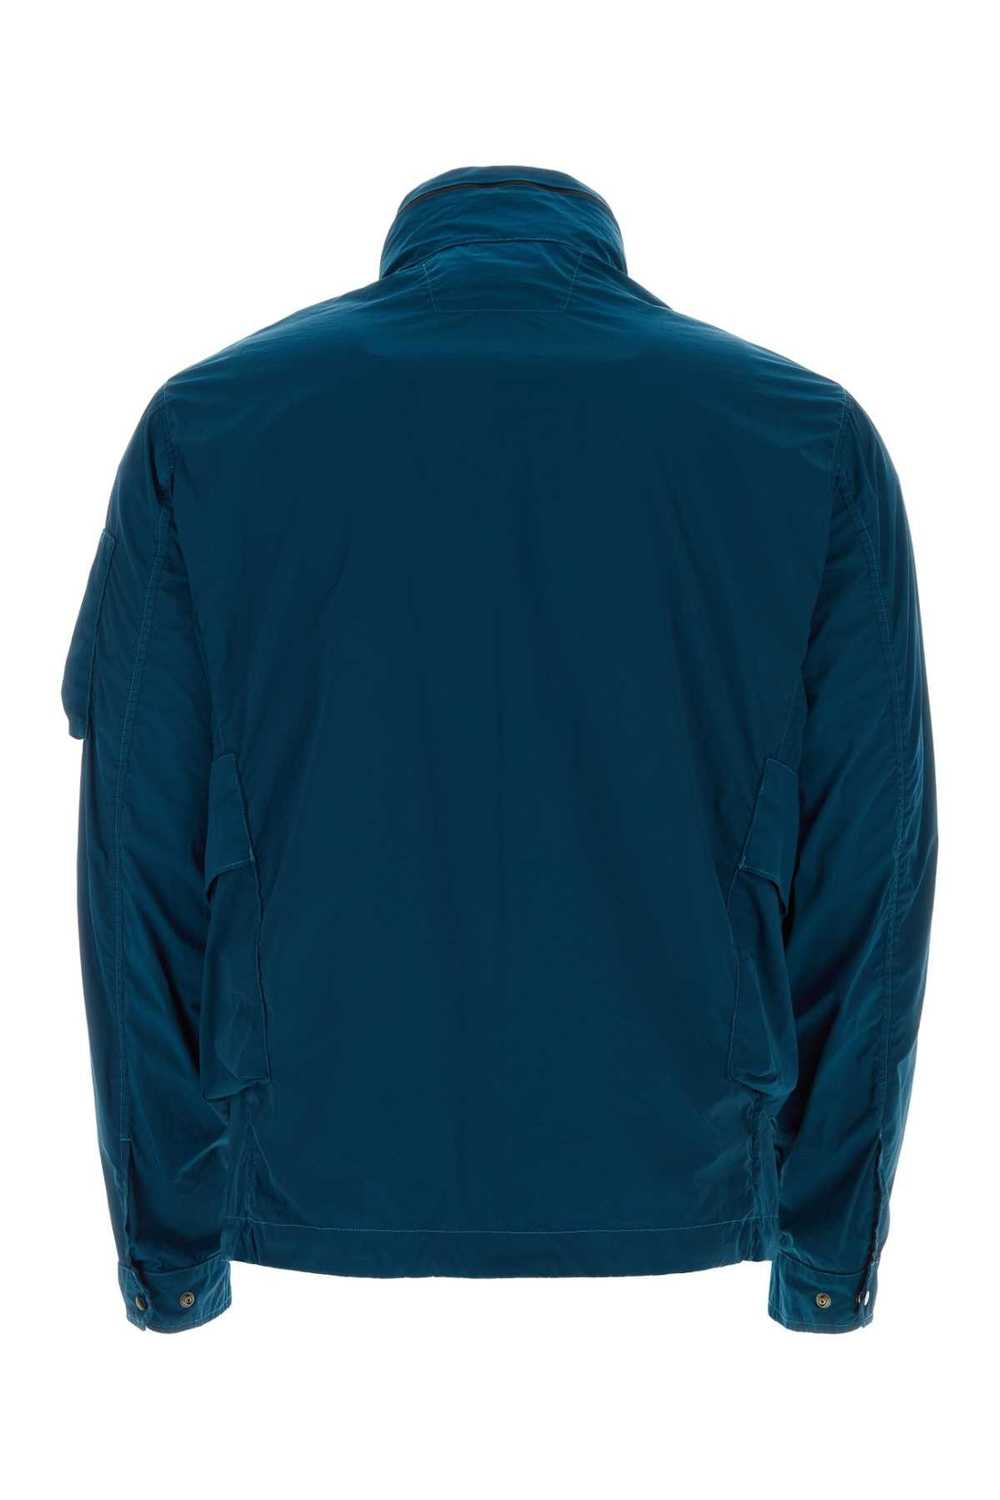 C.P. Company Blue Stretch Nylon Jacket - image 2